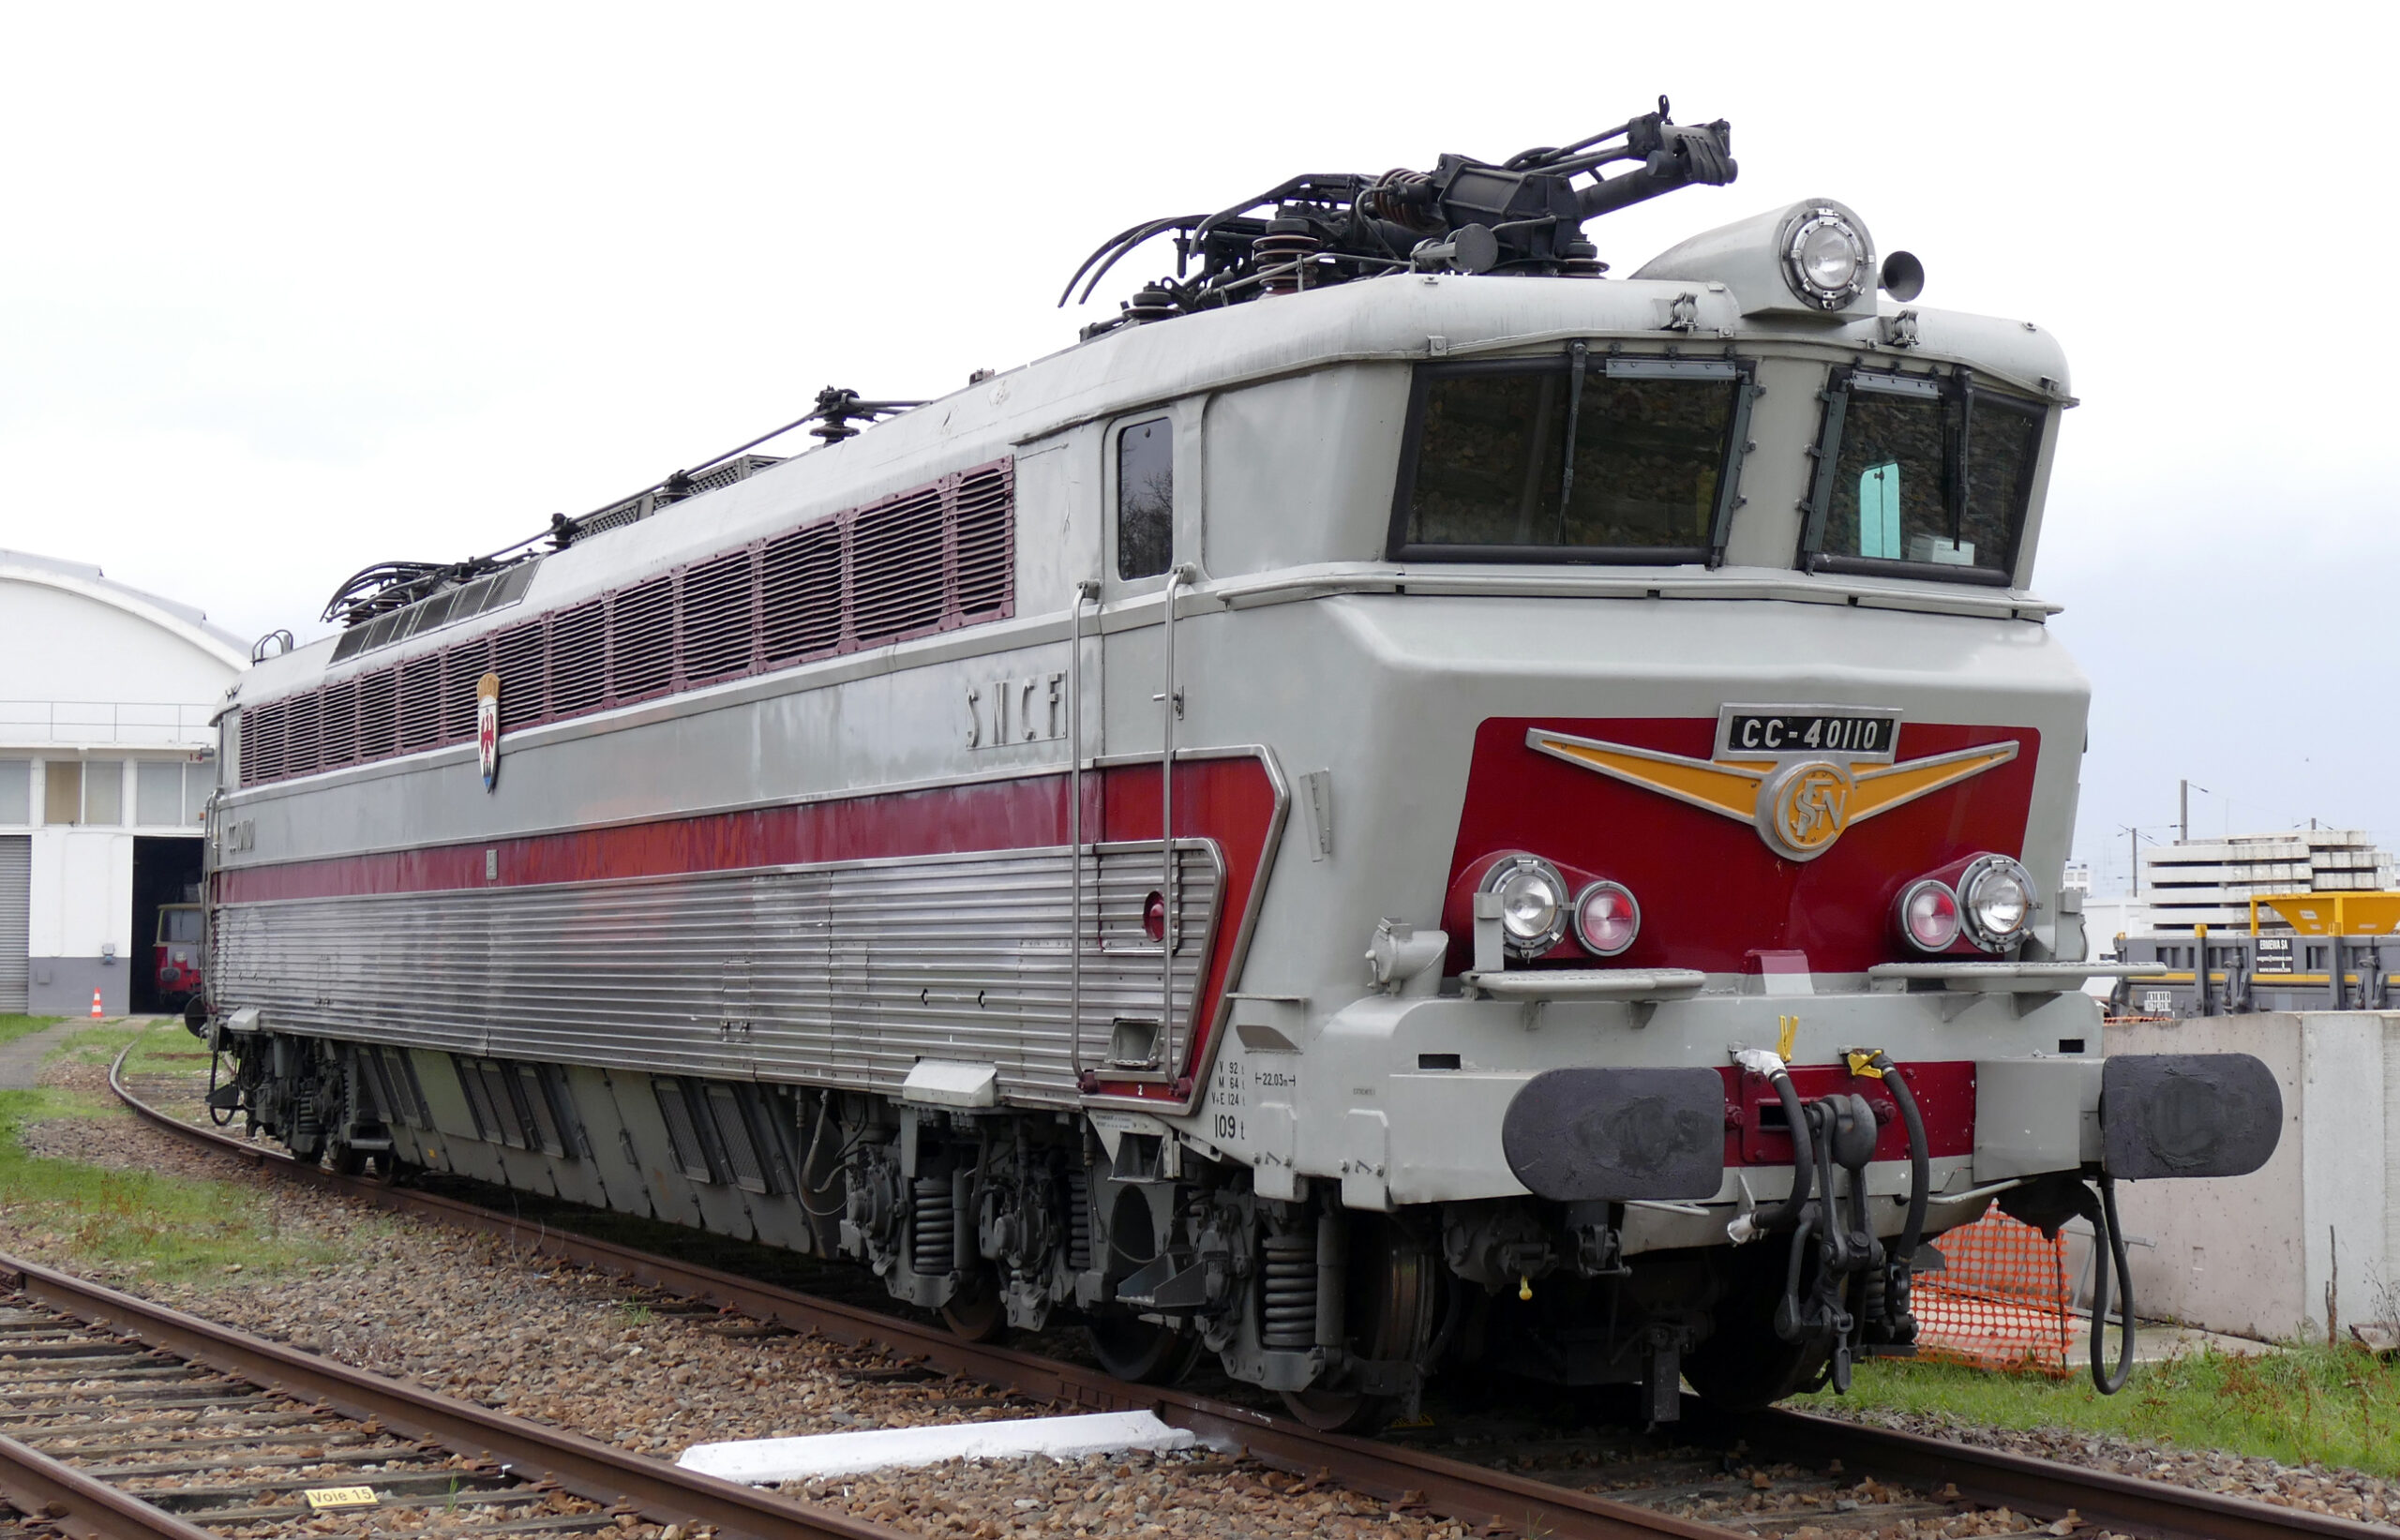 Locomotive CC 40110